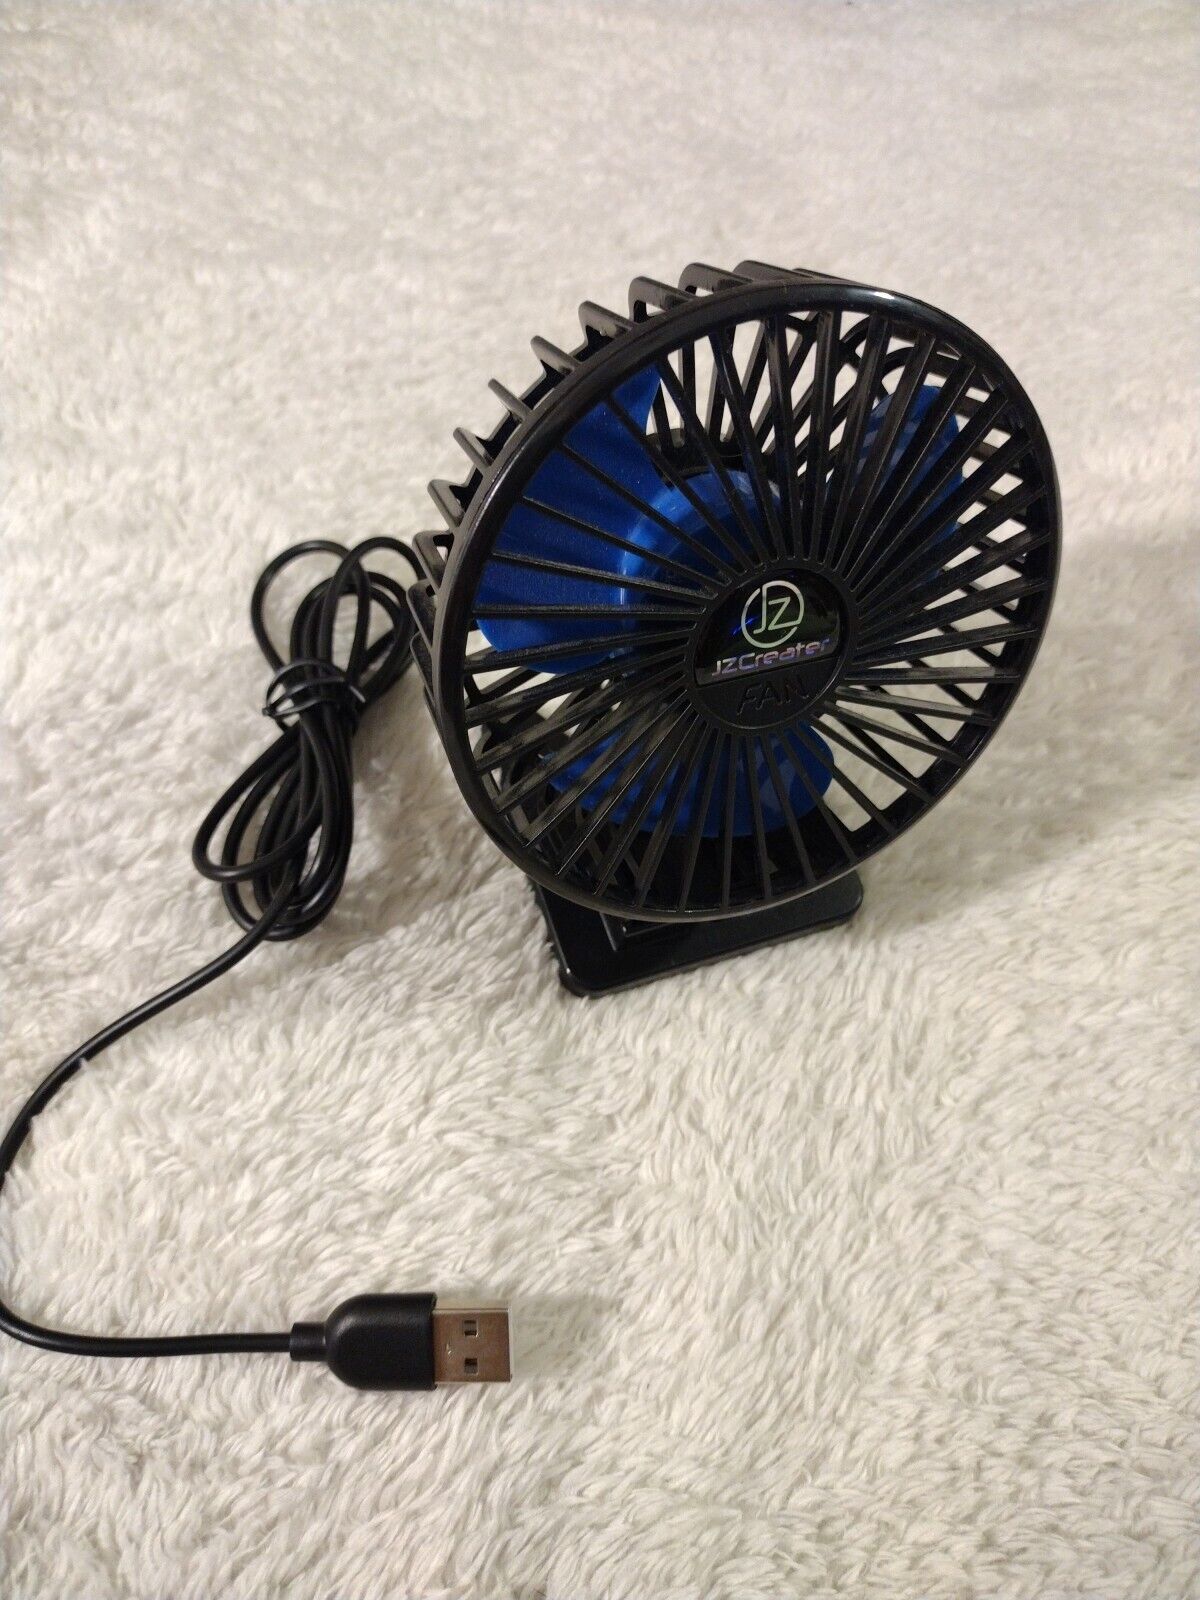 Mini USB Cooling Fan Silent Air Cooler For PC Computer Desktop Portable